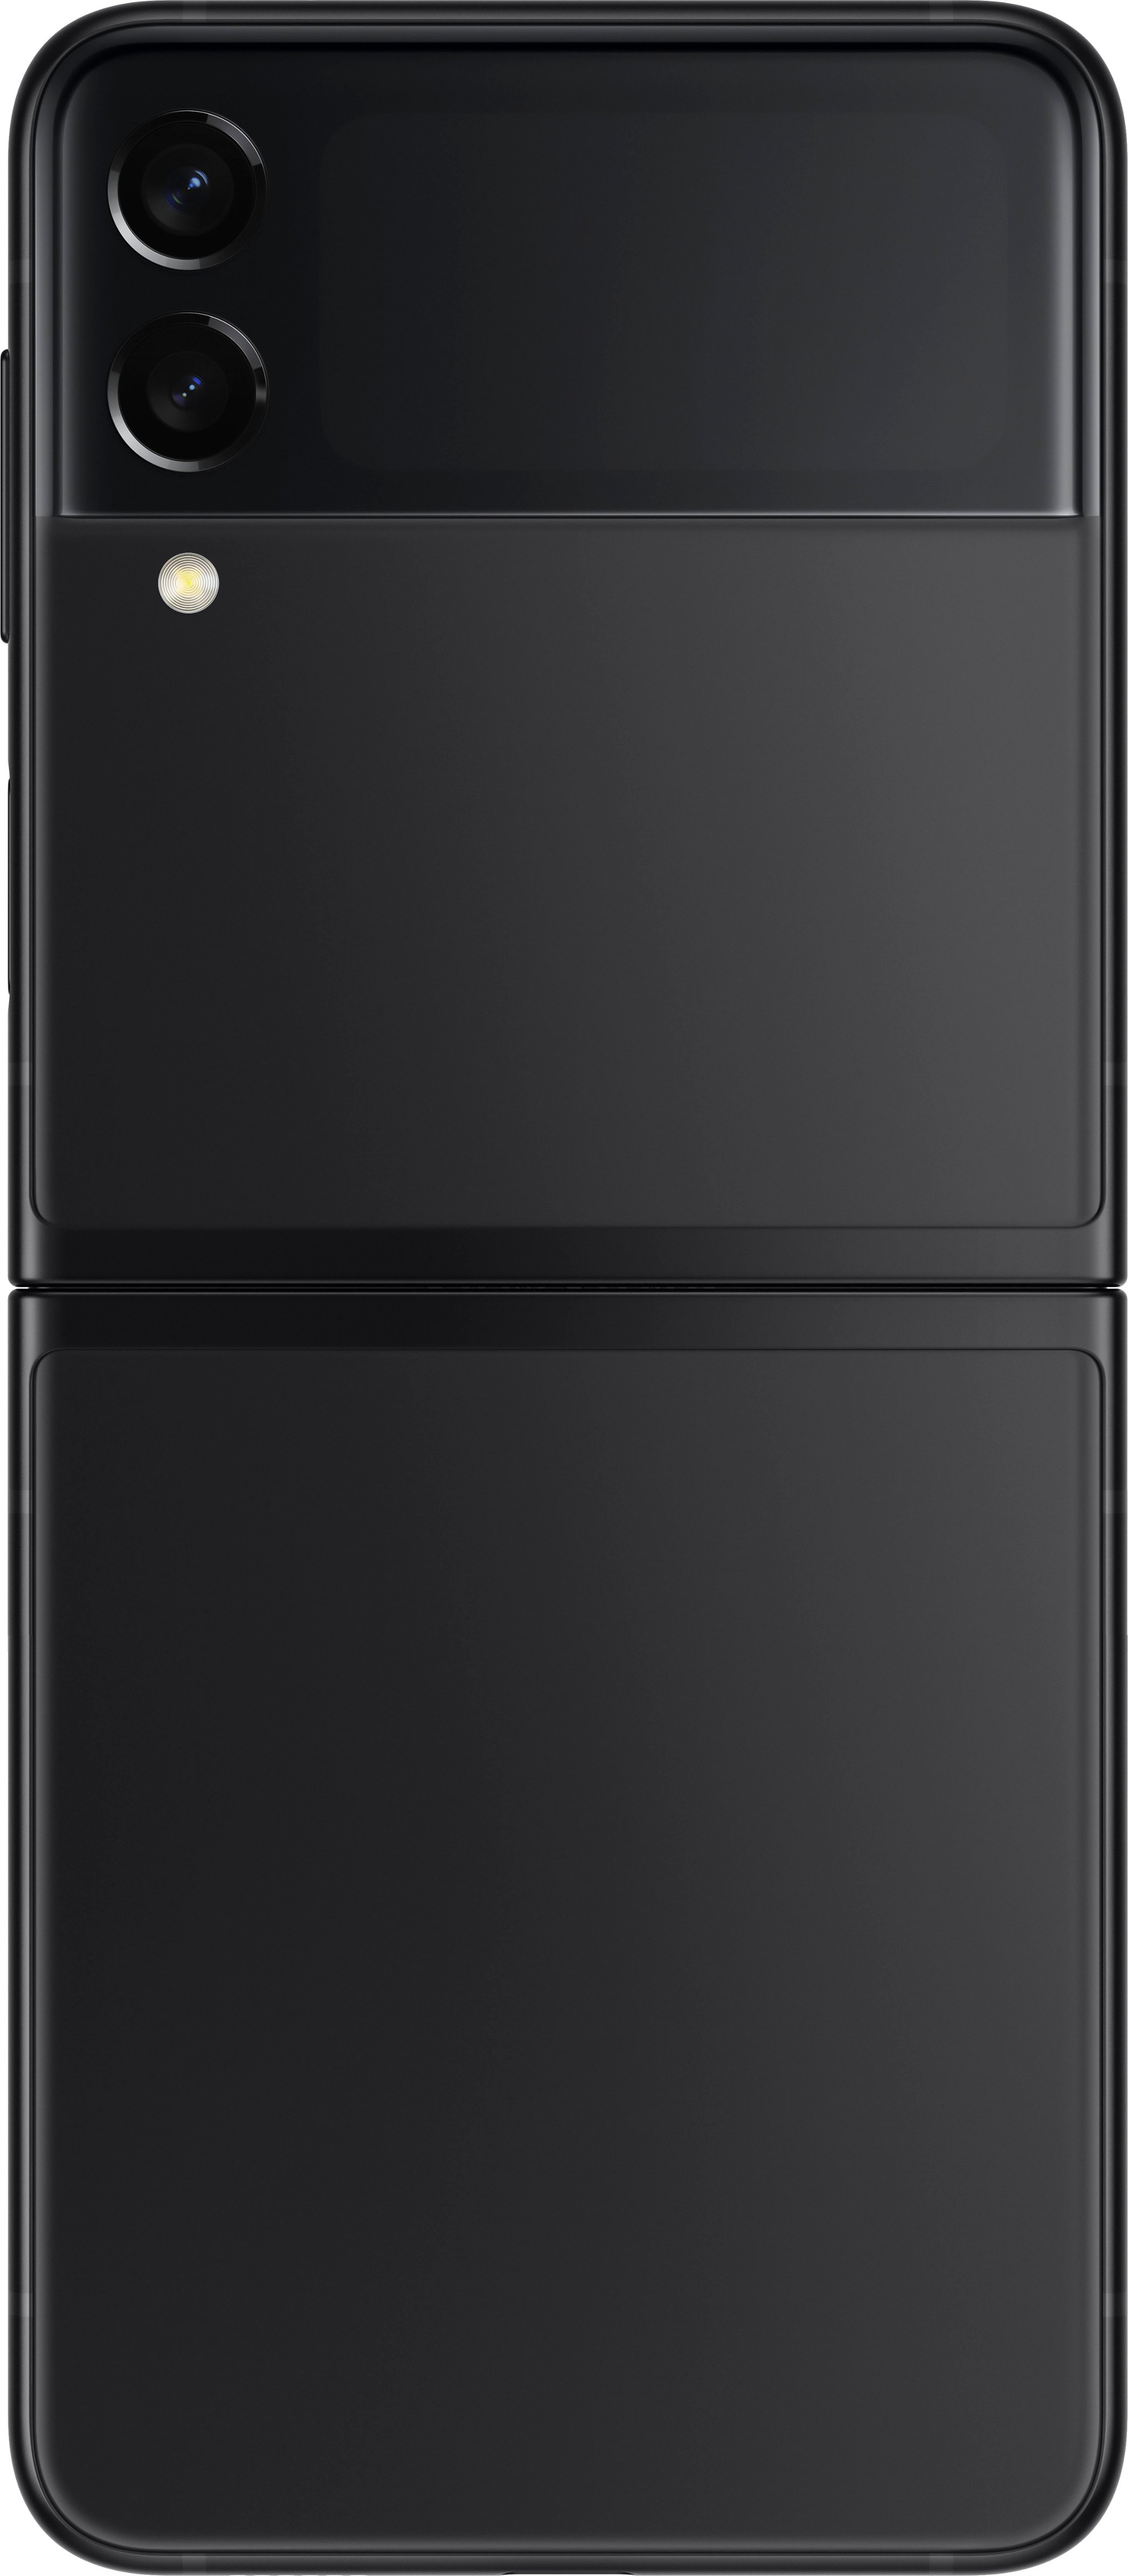 Samsung Galaxy Z Flip with 256GB Memory Cell Phone (Unlocked)  SM-F700UZKDXAA - Best Buy